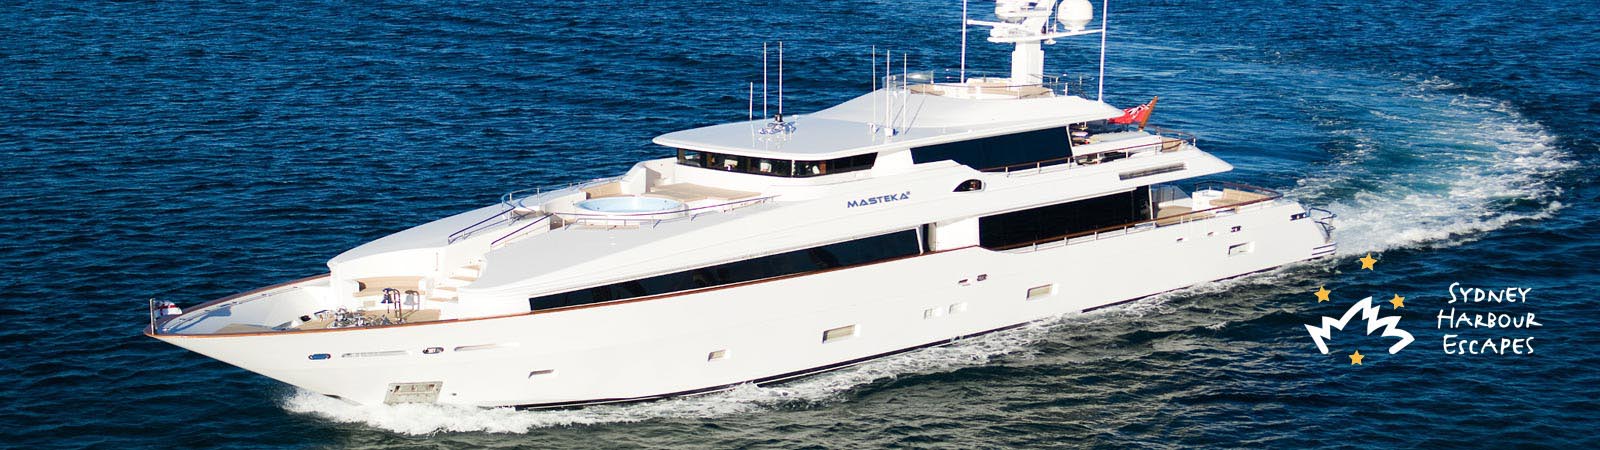 Masteka 2 - Super Yacht Charter